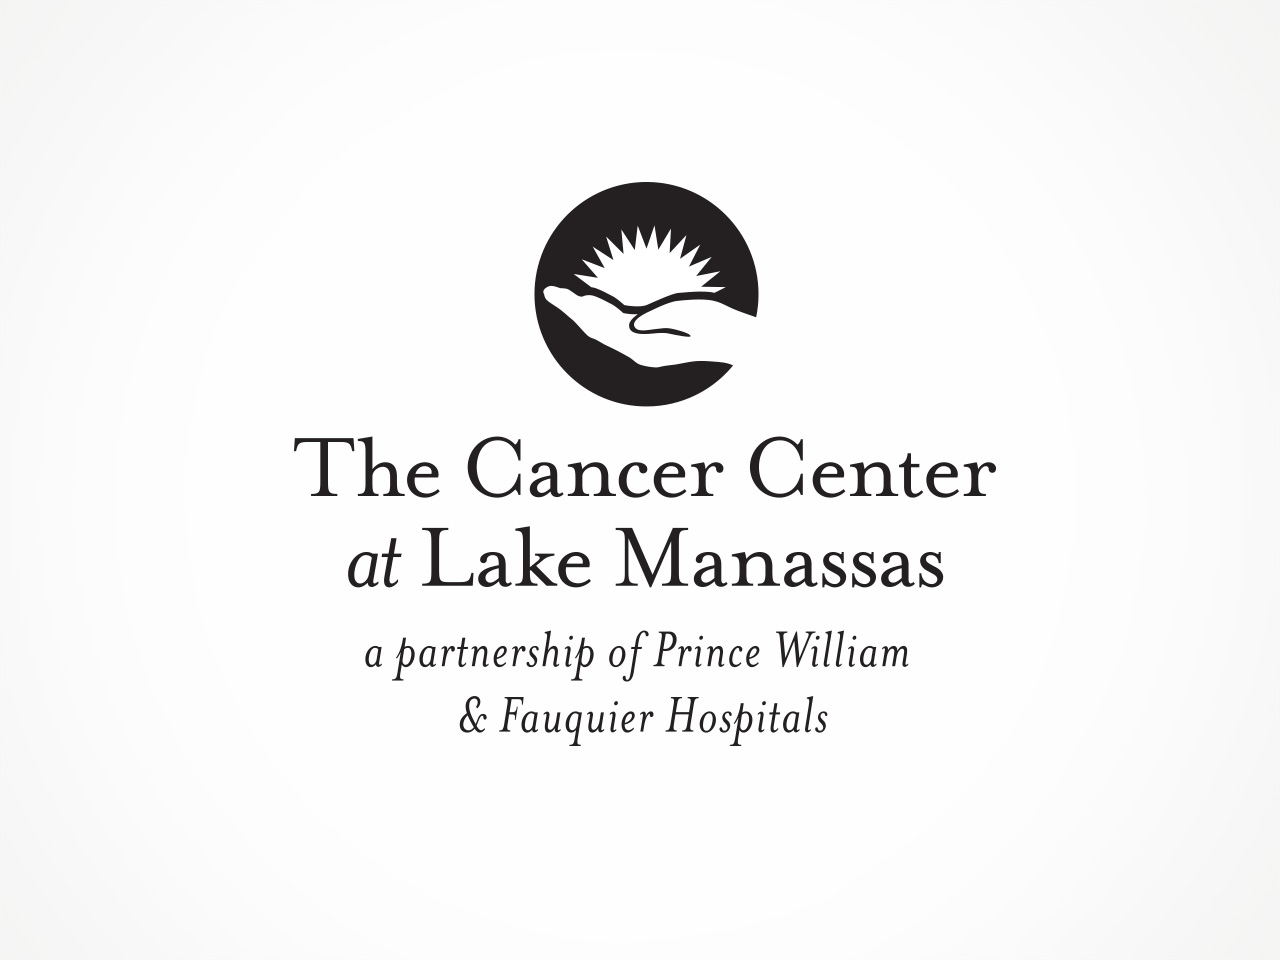 The Cancer Center at Lake Manassas logo